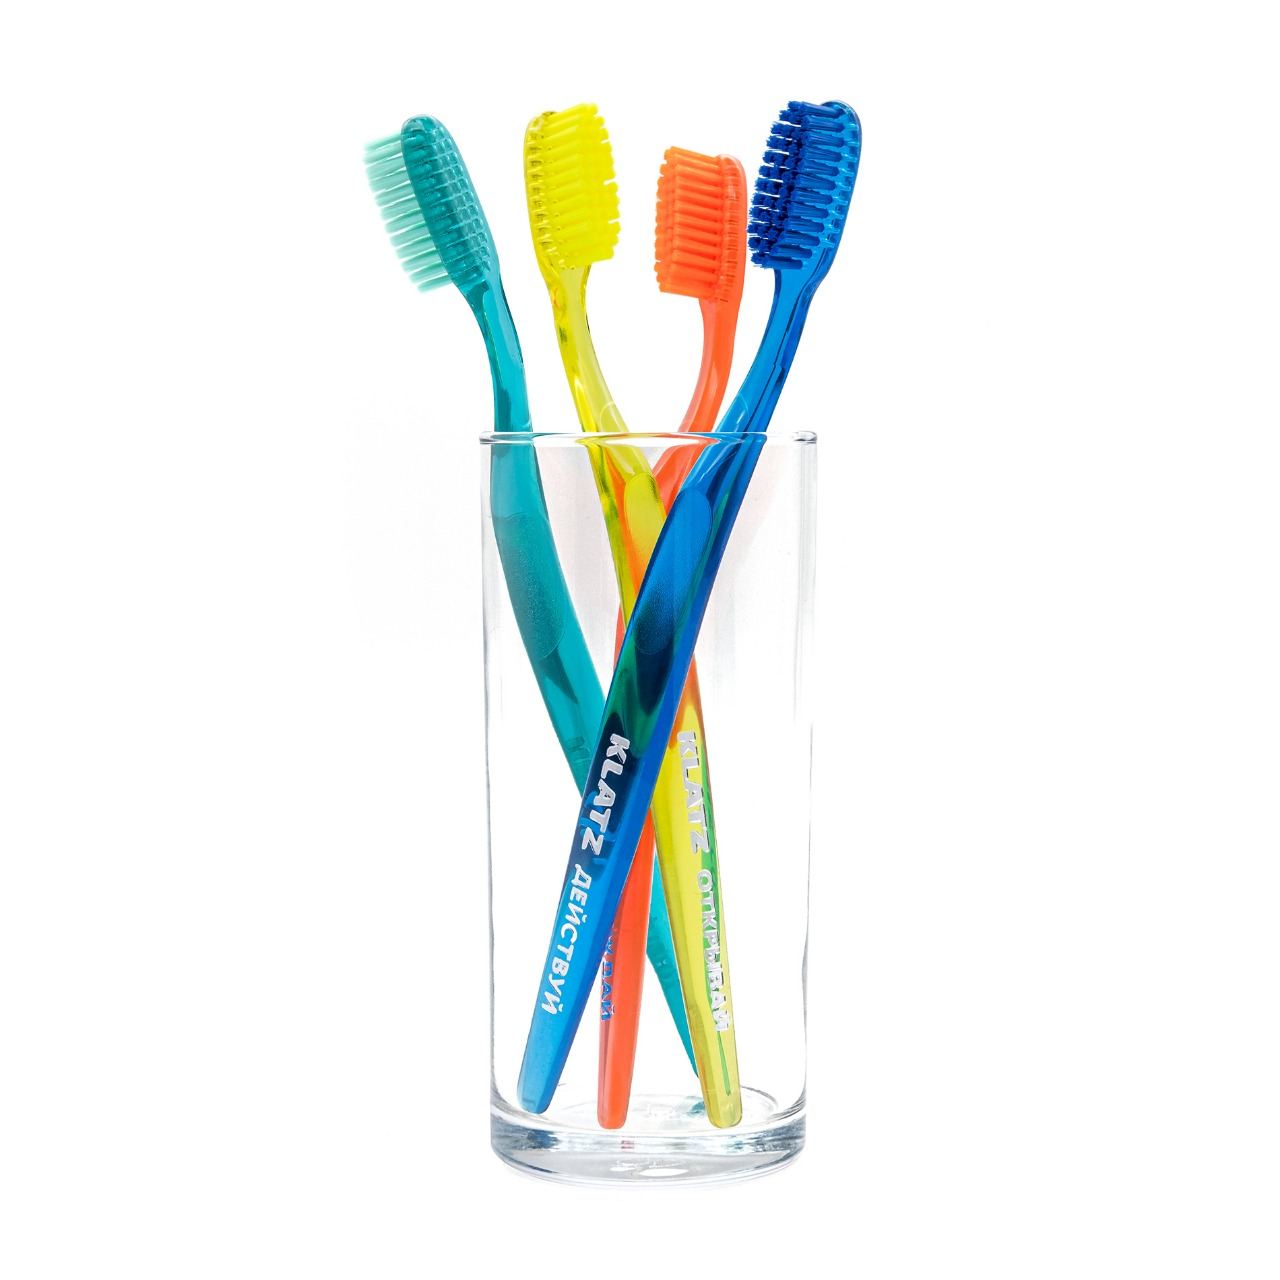 Toothbrush Lifestyle medium